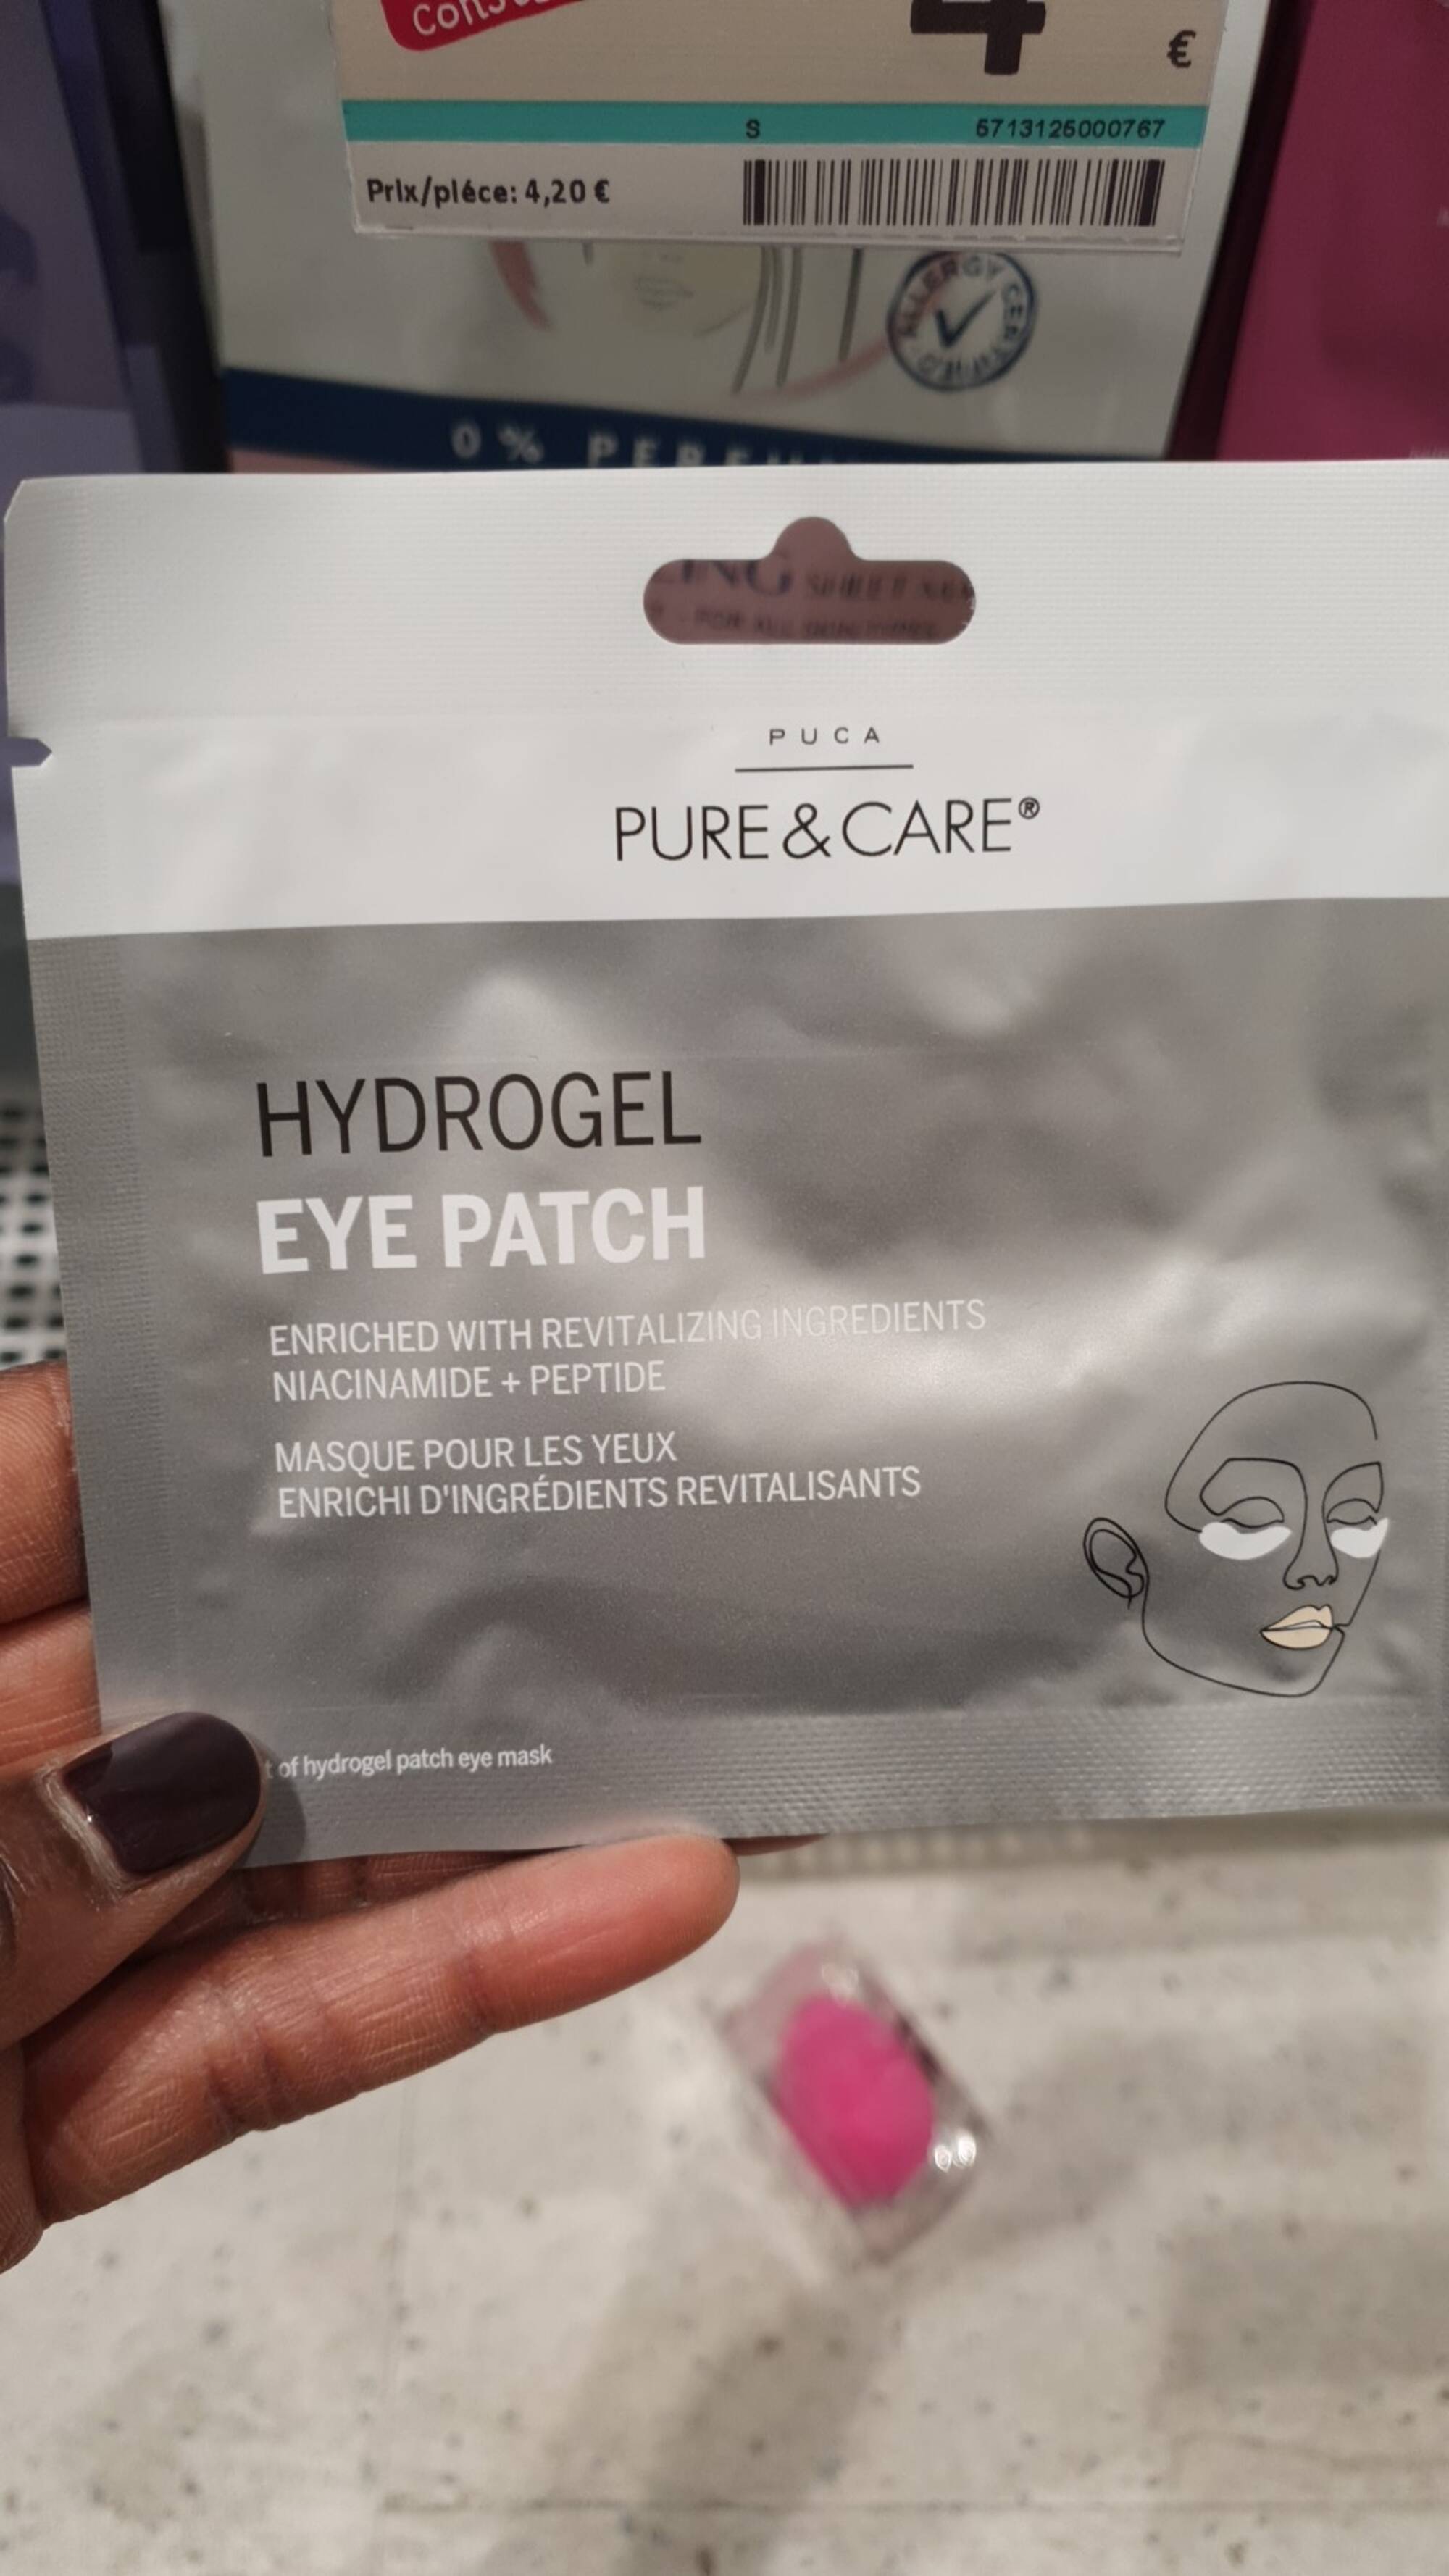 PURE & CARE - Hydrogel - Eye patch, masque pour les yeux